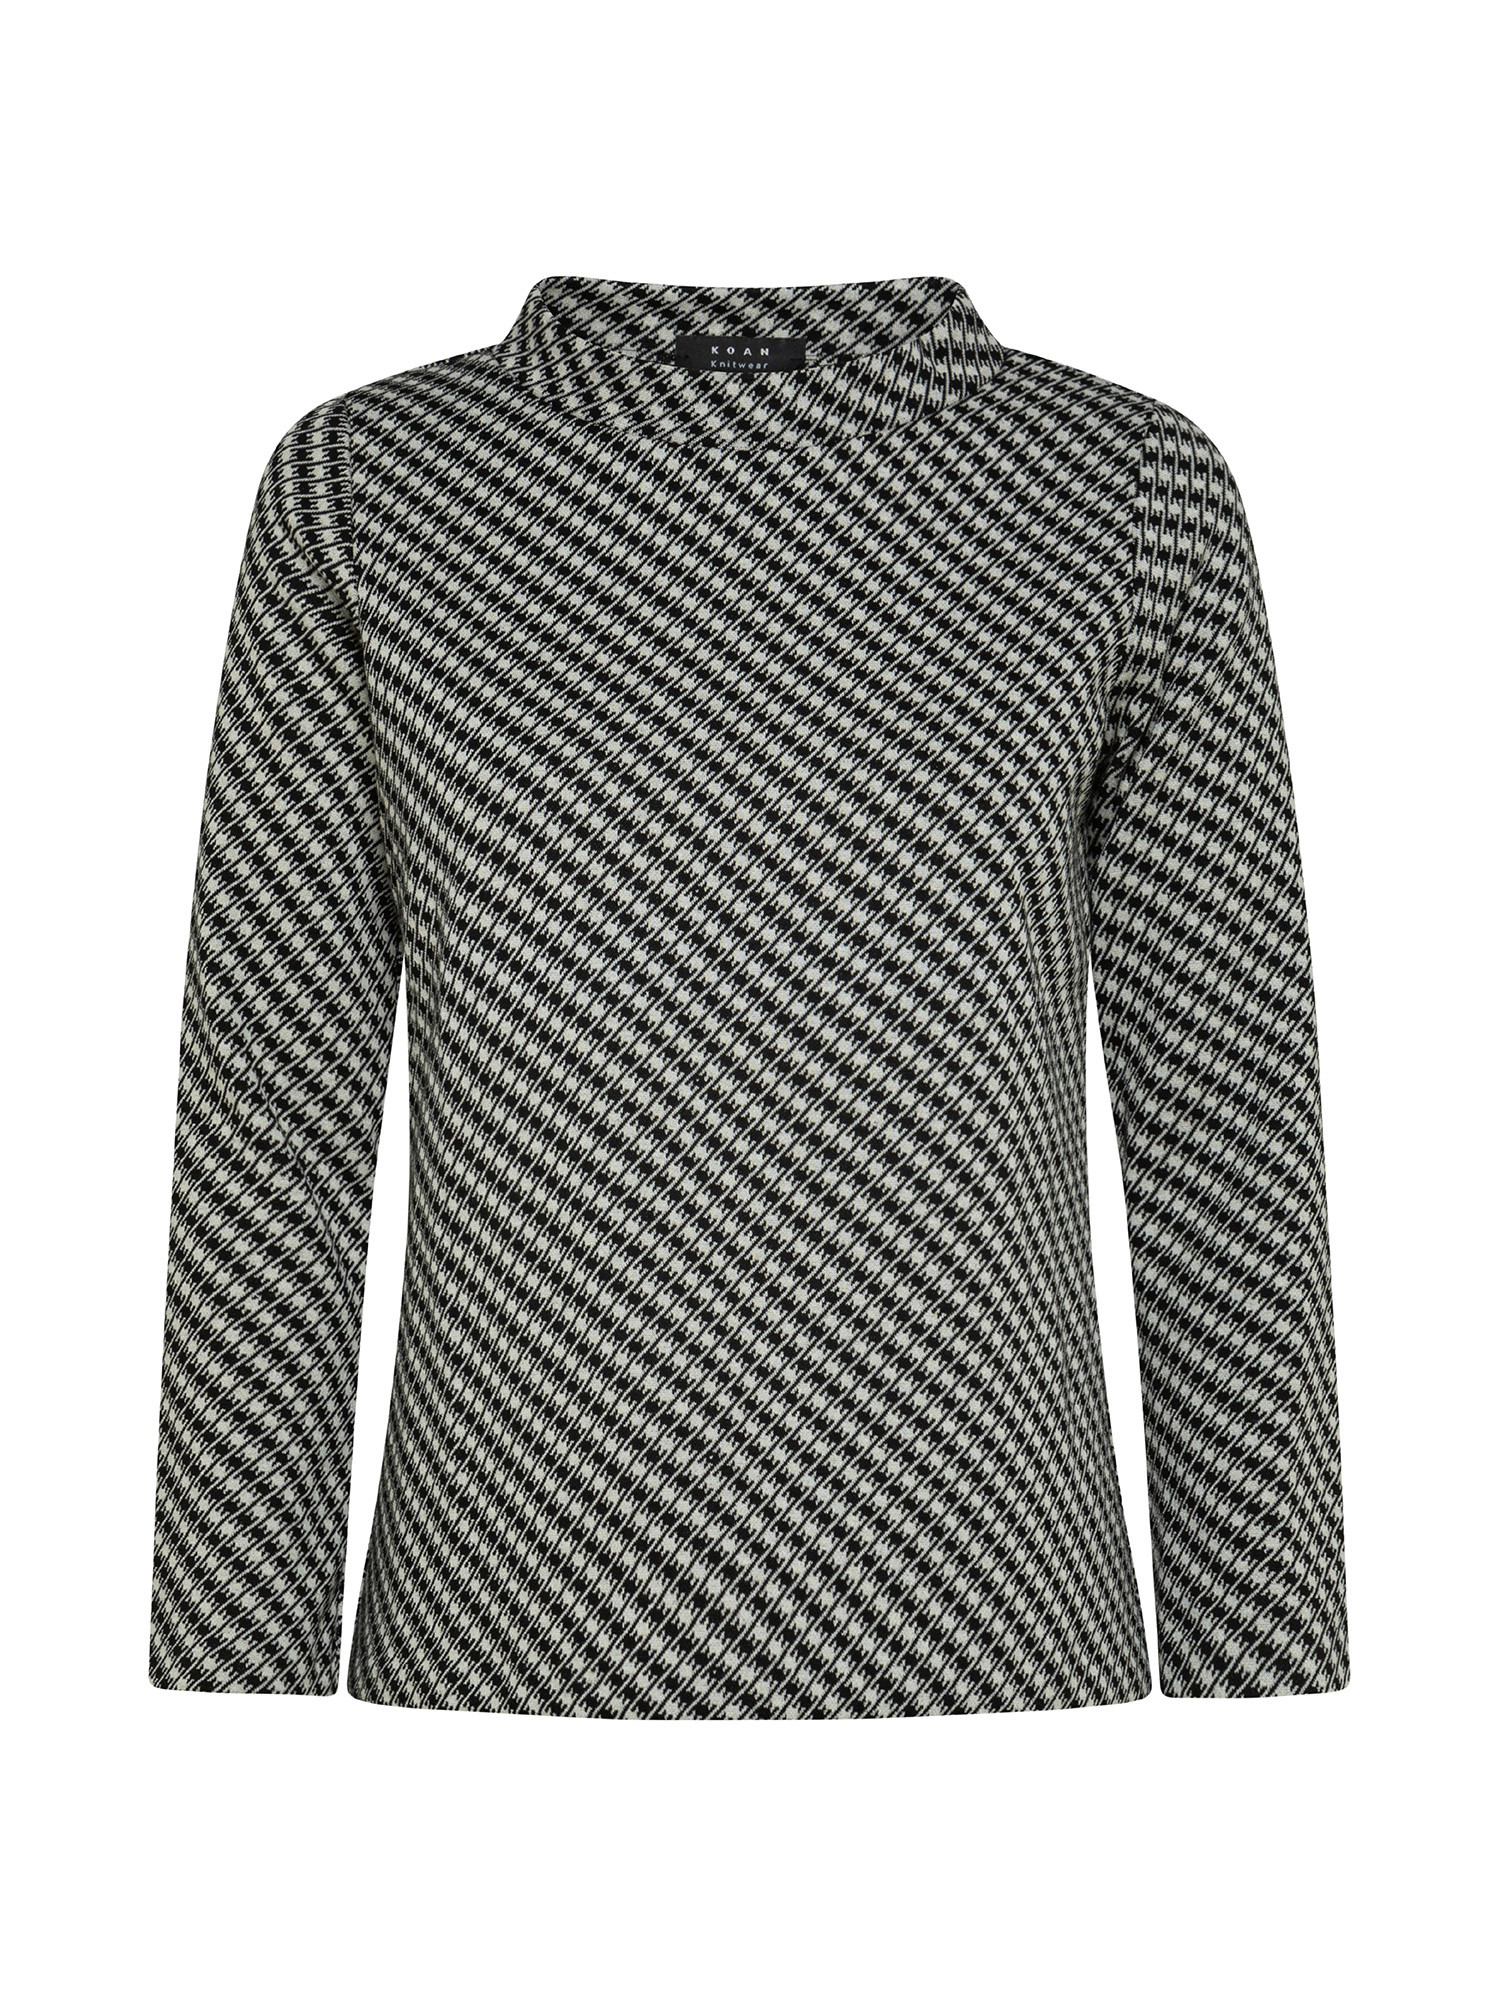 Koan - Jacquard turtleneck sweater, White, large image number 0